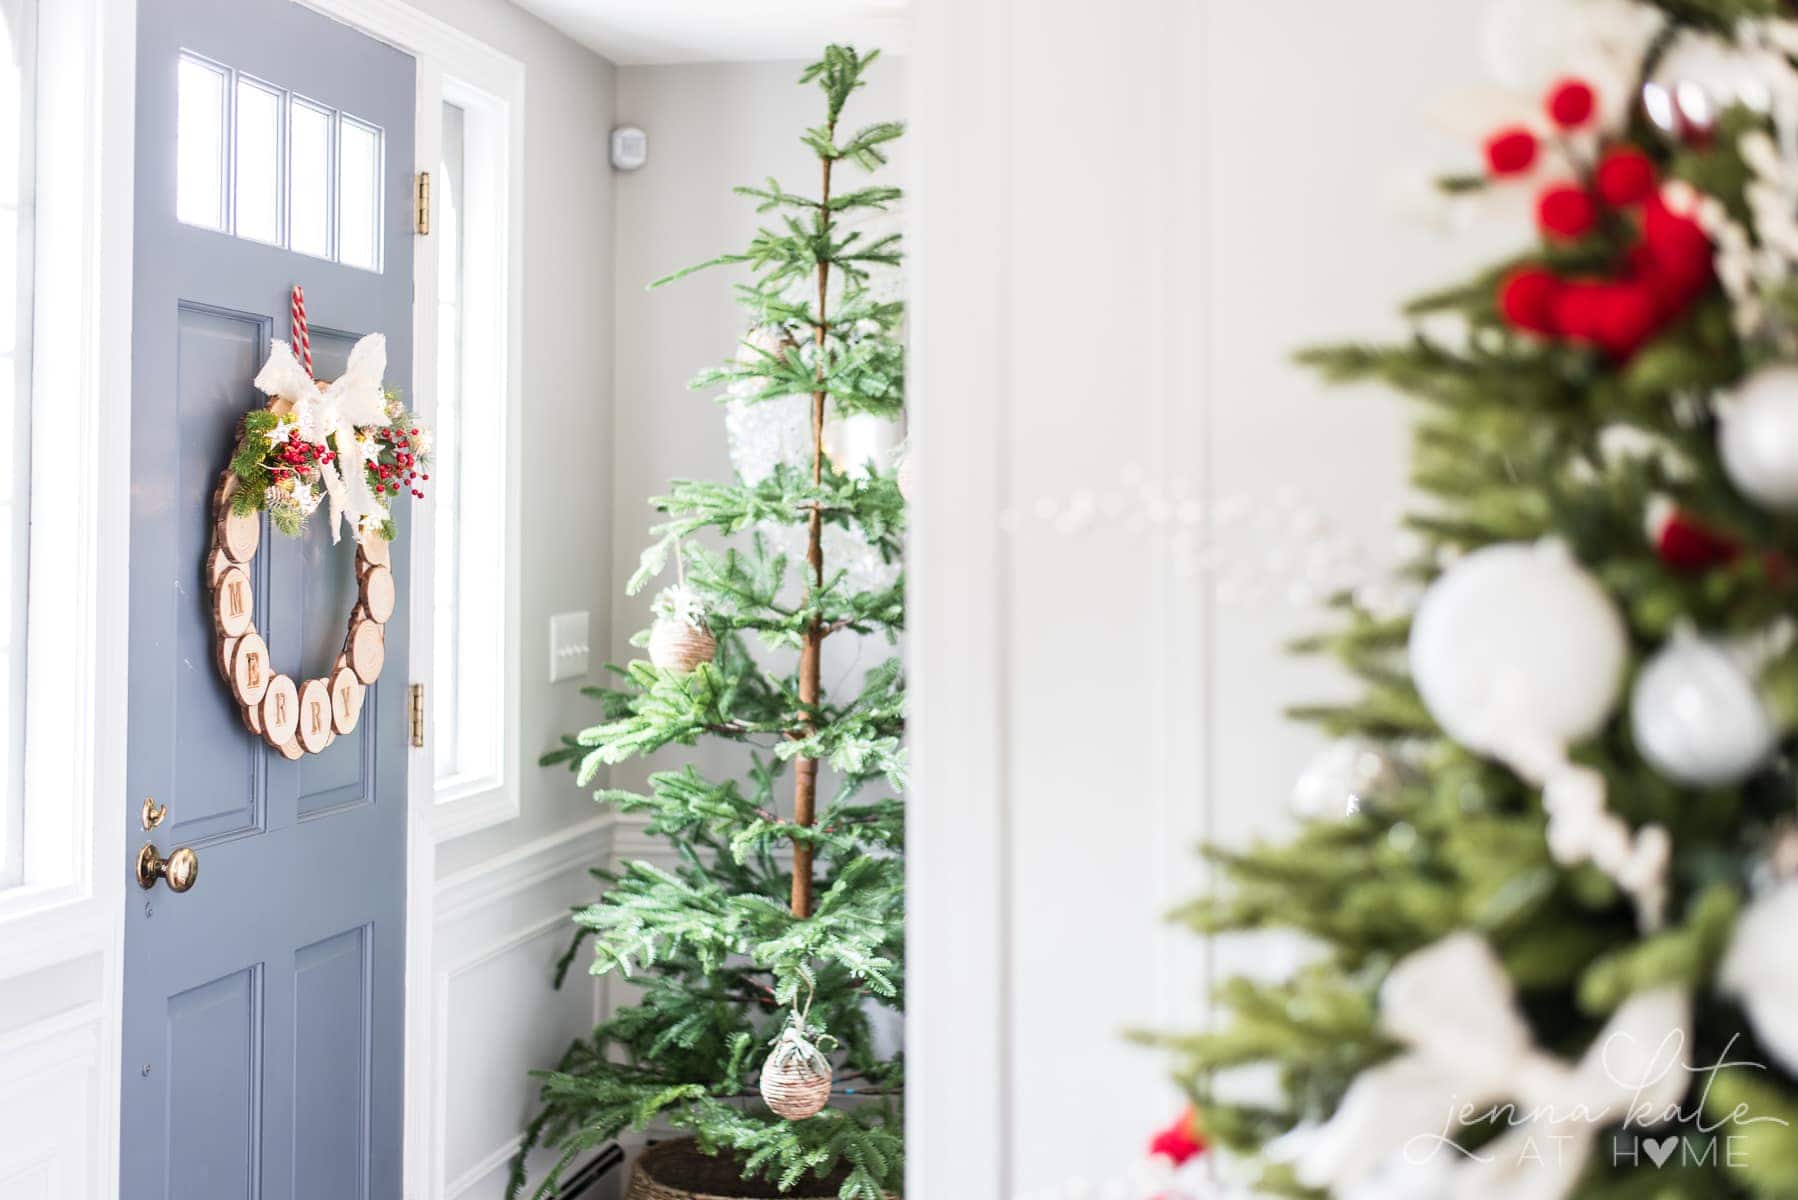 How to make a DIY wood slice Christmas wreath